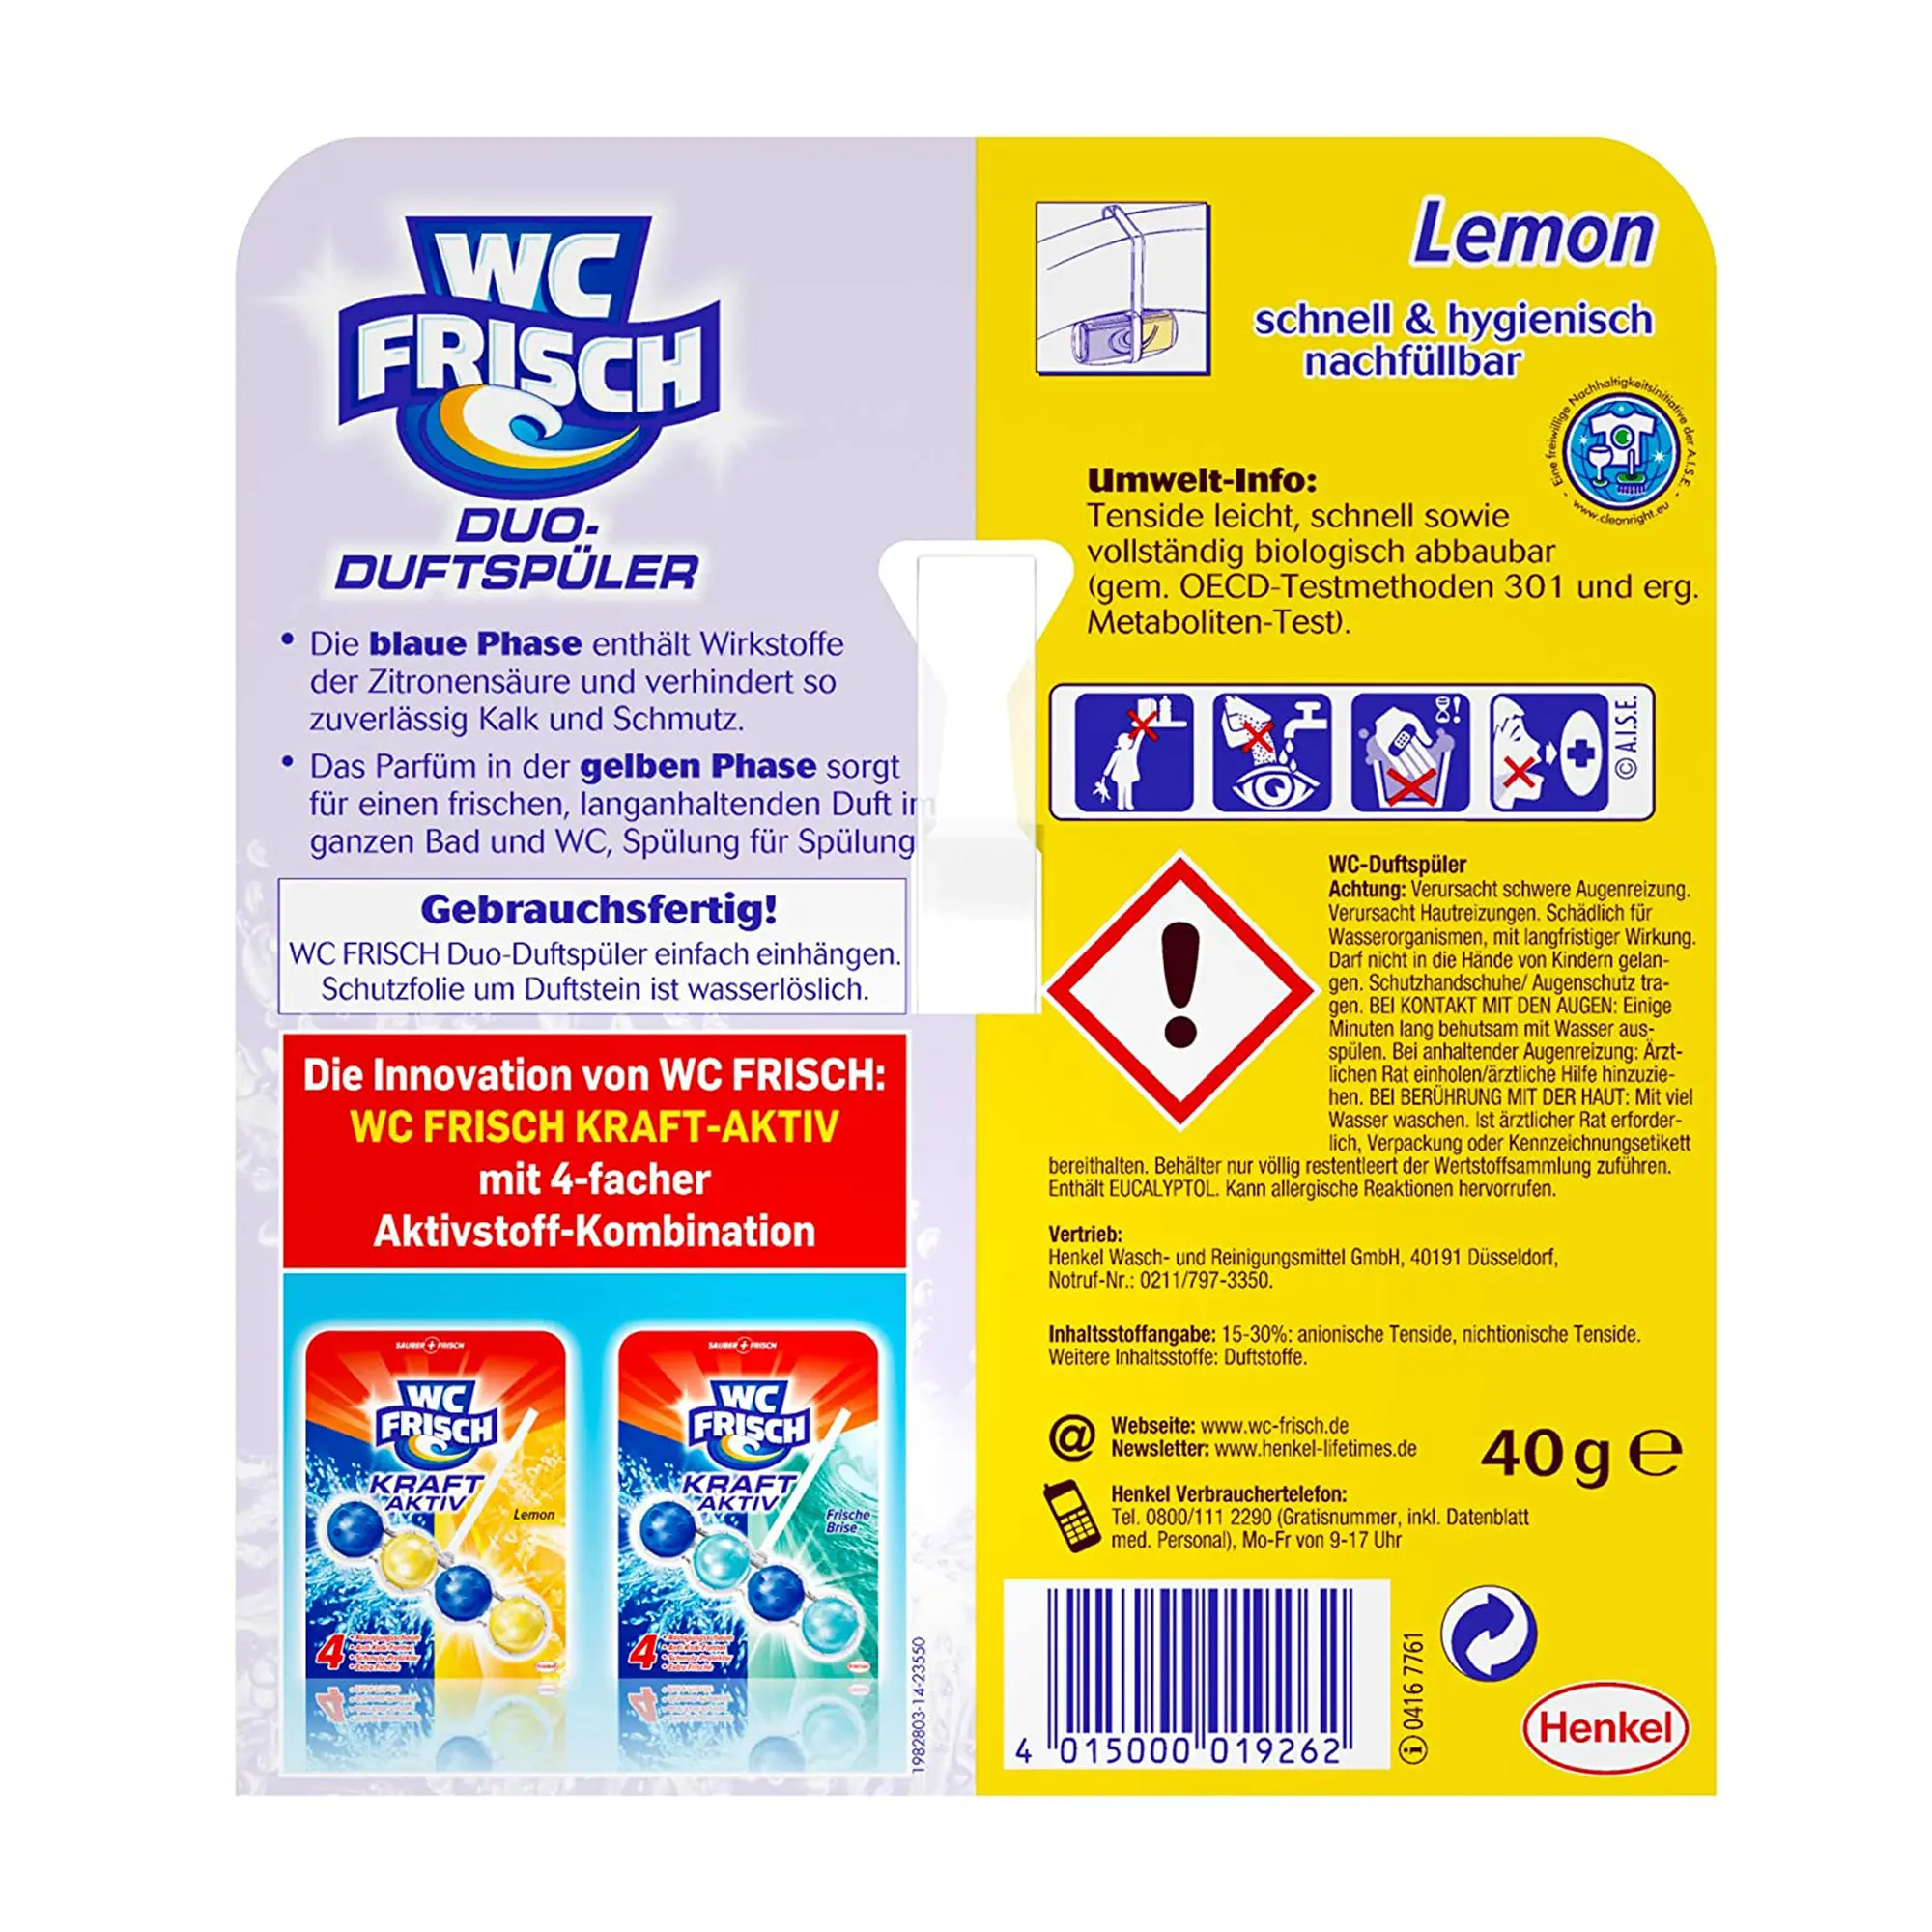 WC Frisch Duo-Duftspüler Citrus BP10